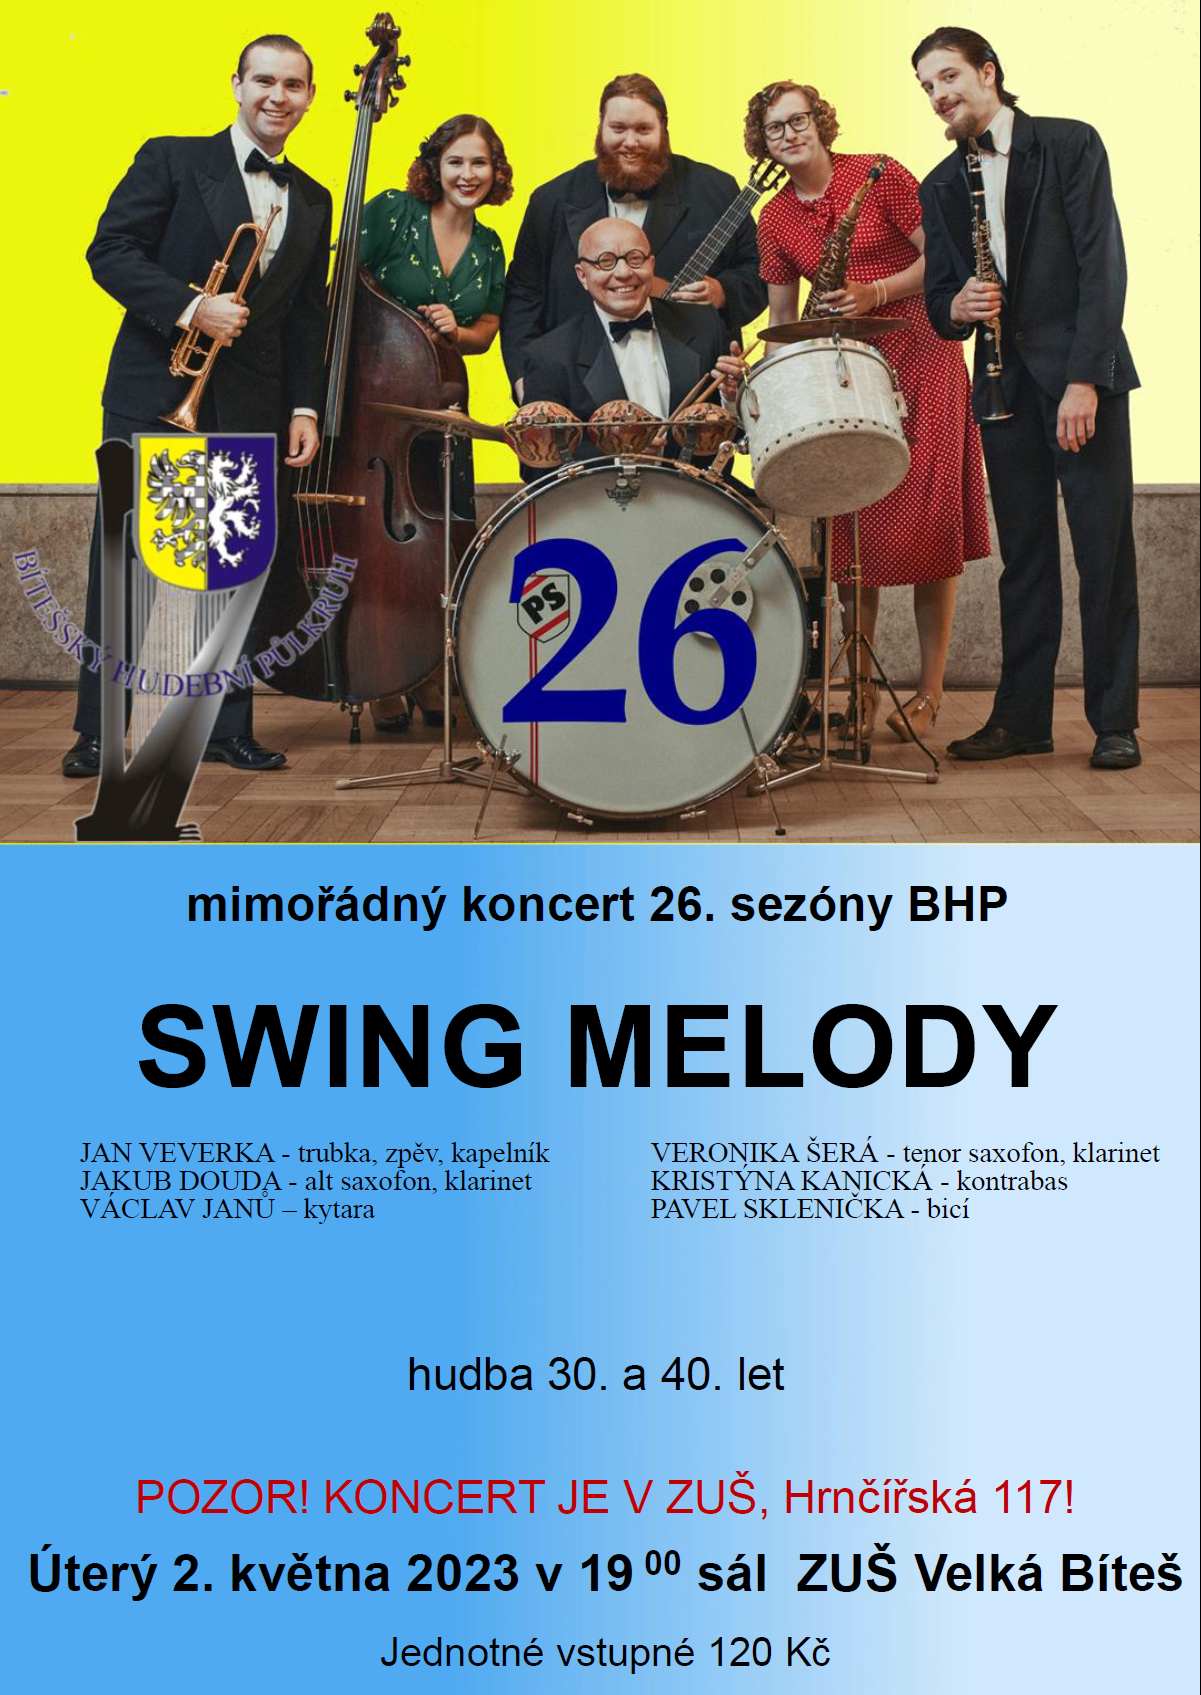 BHP-Swing melody